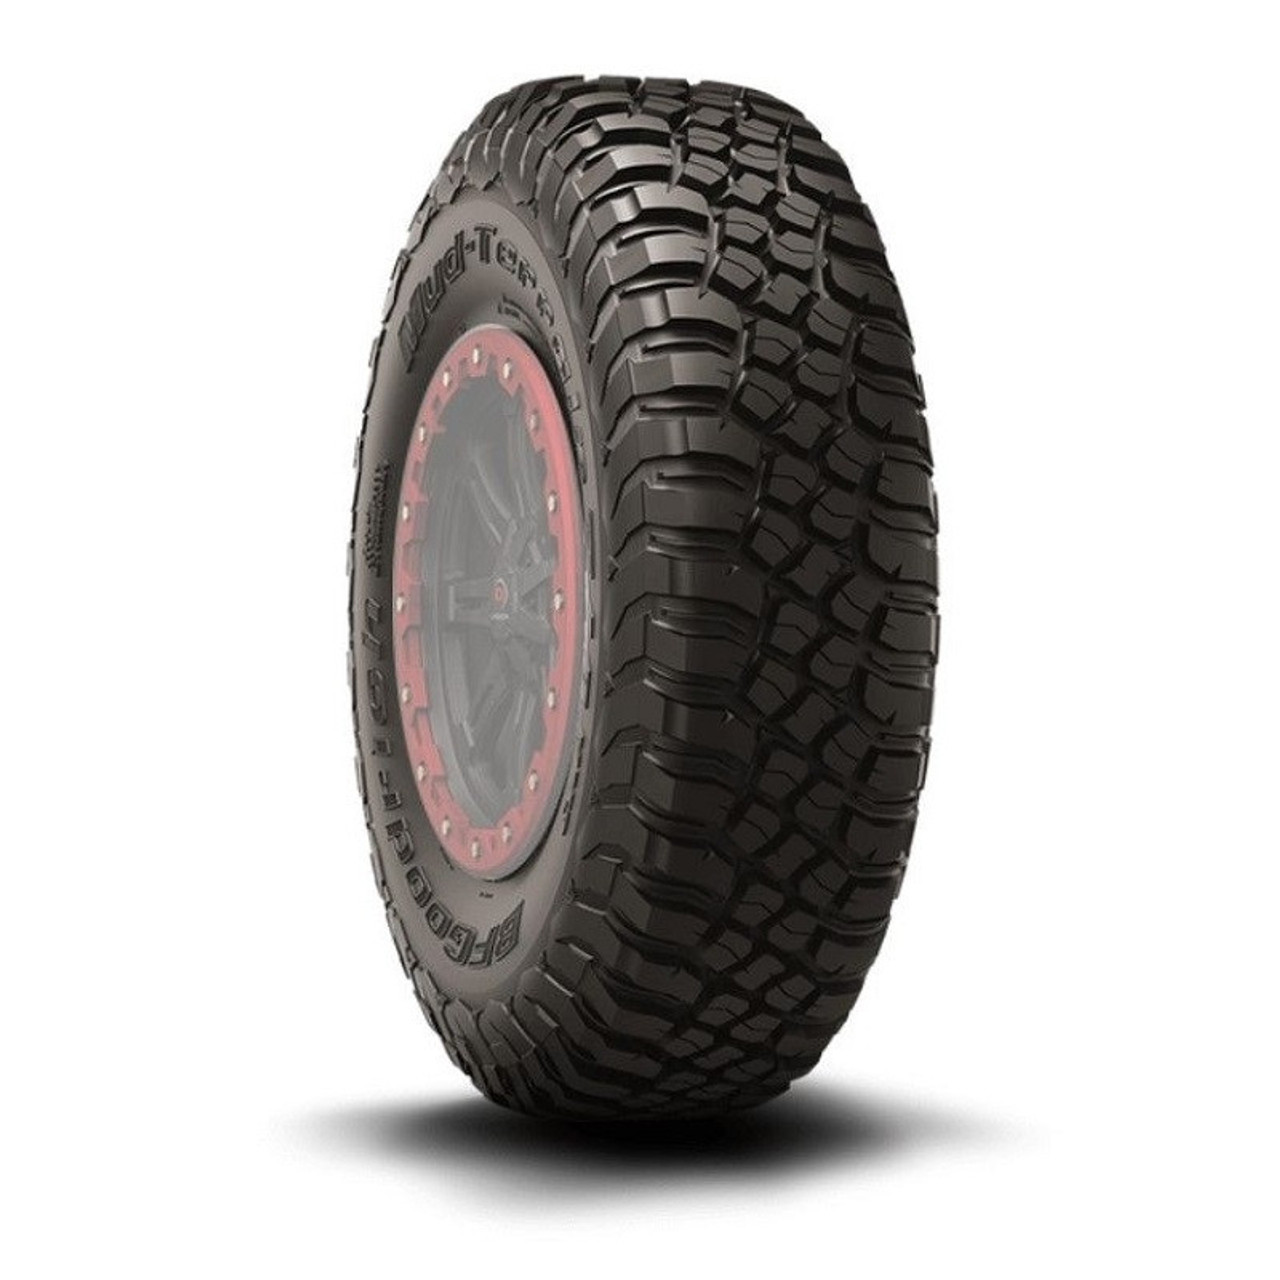 Honda Pioneer / Talon Mud Terrain KM3 8-ply Radial Tire - 14 and 15 inch by  BFGoodrich